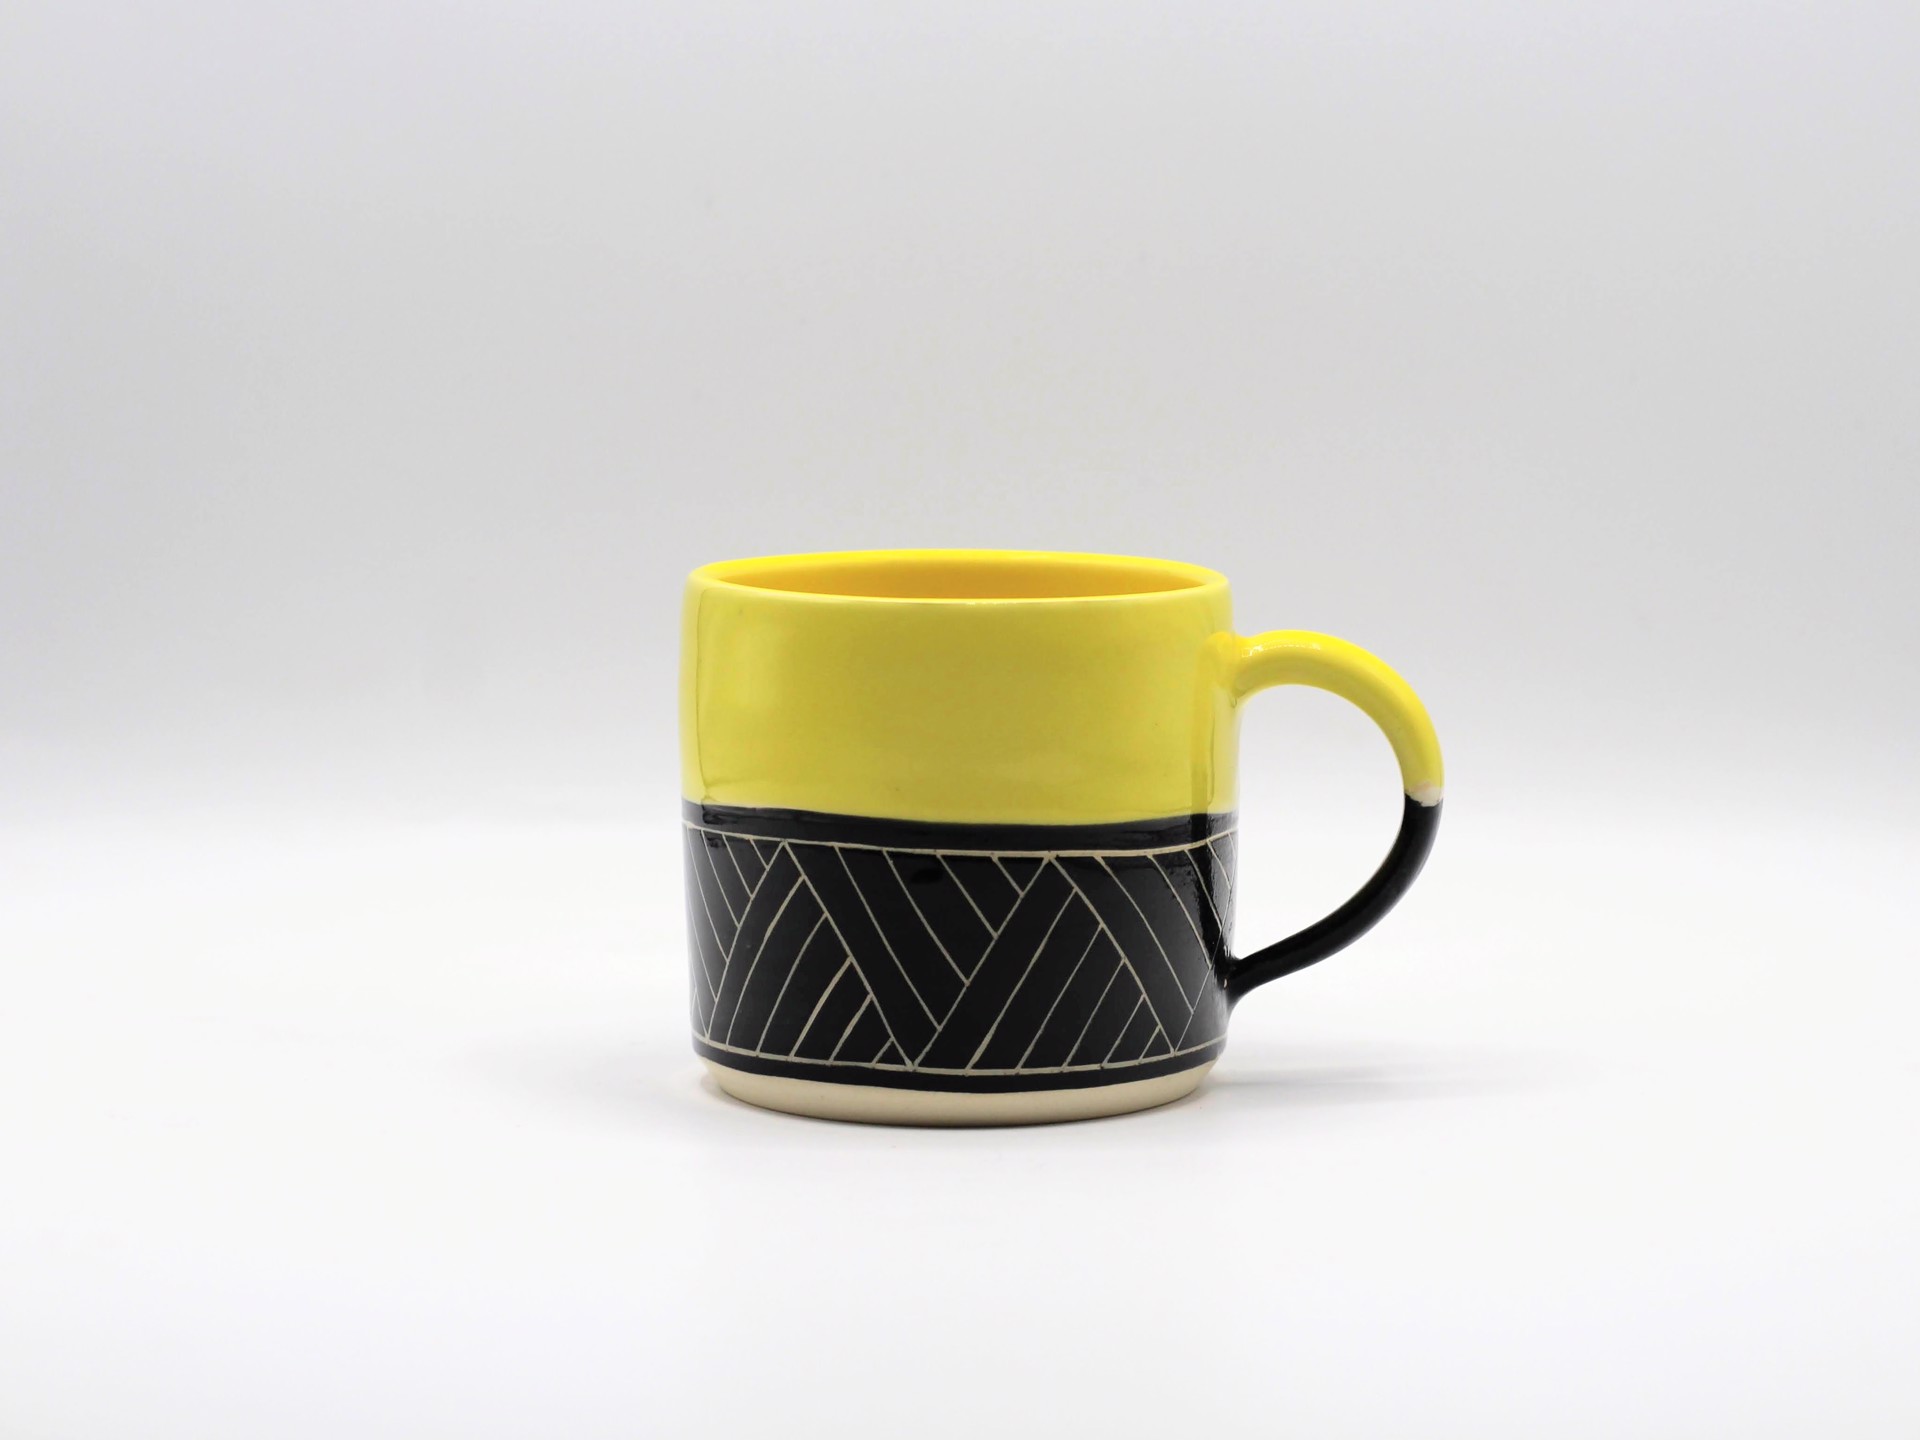 B&W Geometric w/ Yellow Glaze Mug by Kara Lovell